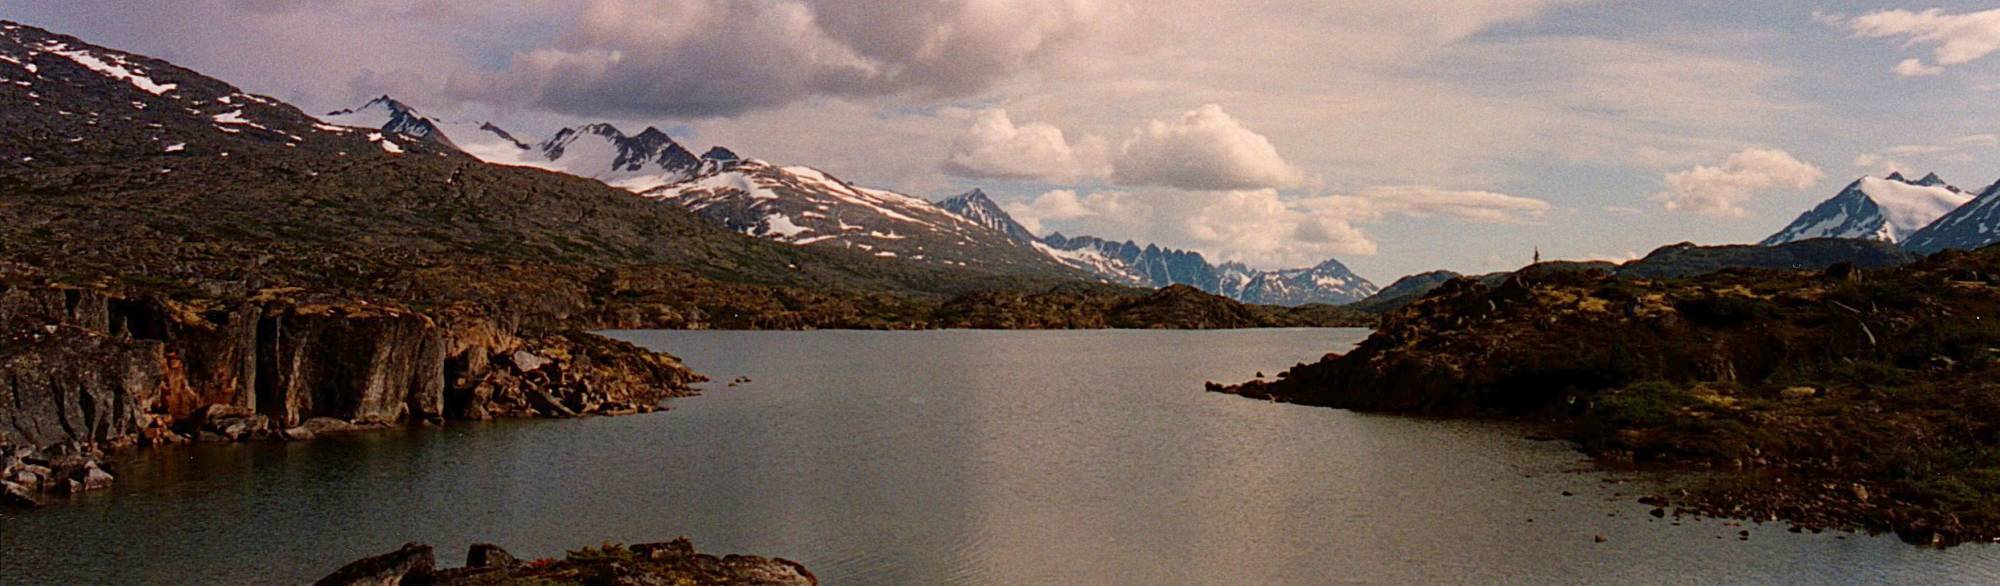 Mountains and lake in Yukon Territory.